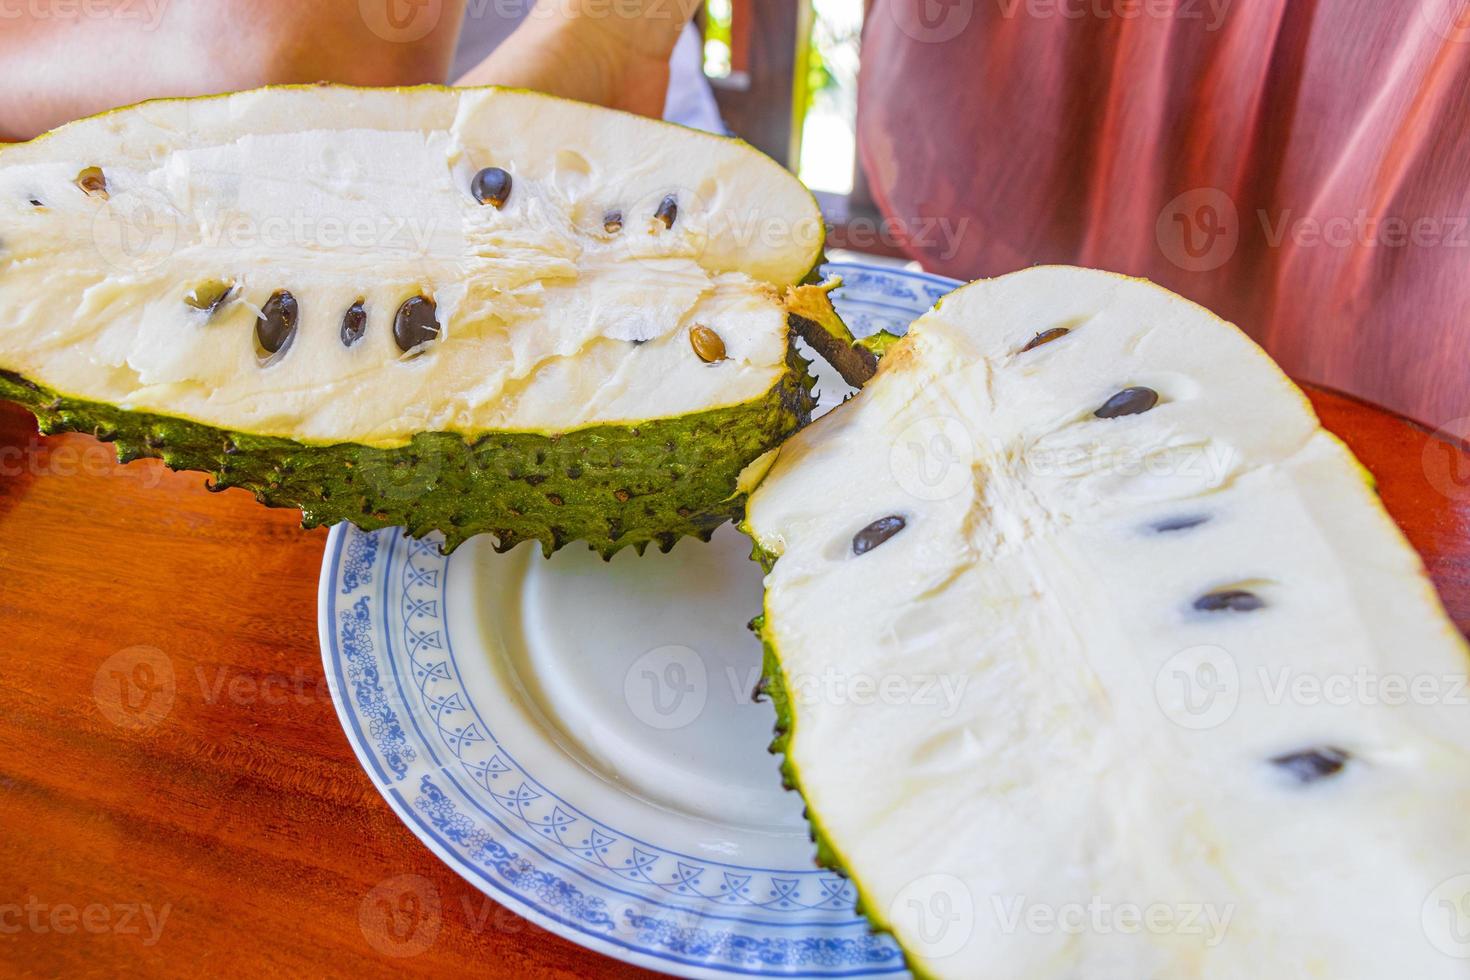 fatiado de graviola sauersack frutas tropicais na chapa branca sri lanka. foto